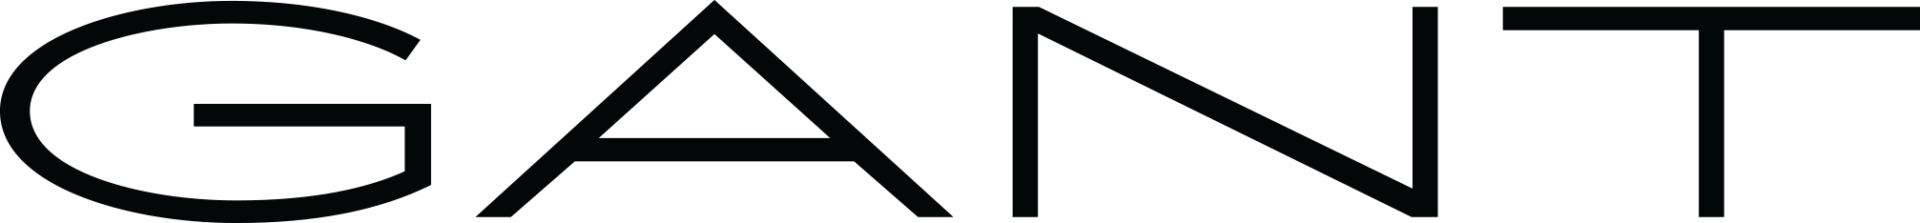 GANT logo by Music in Brands